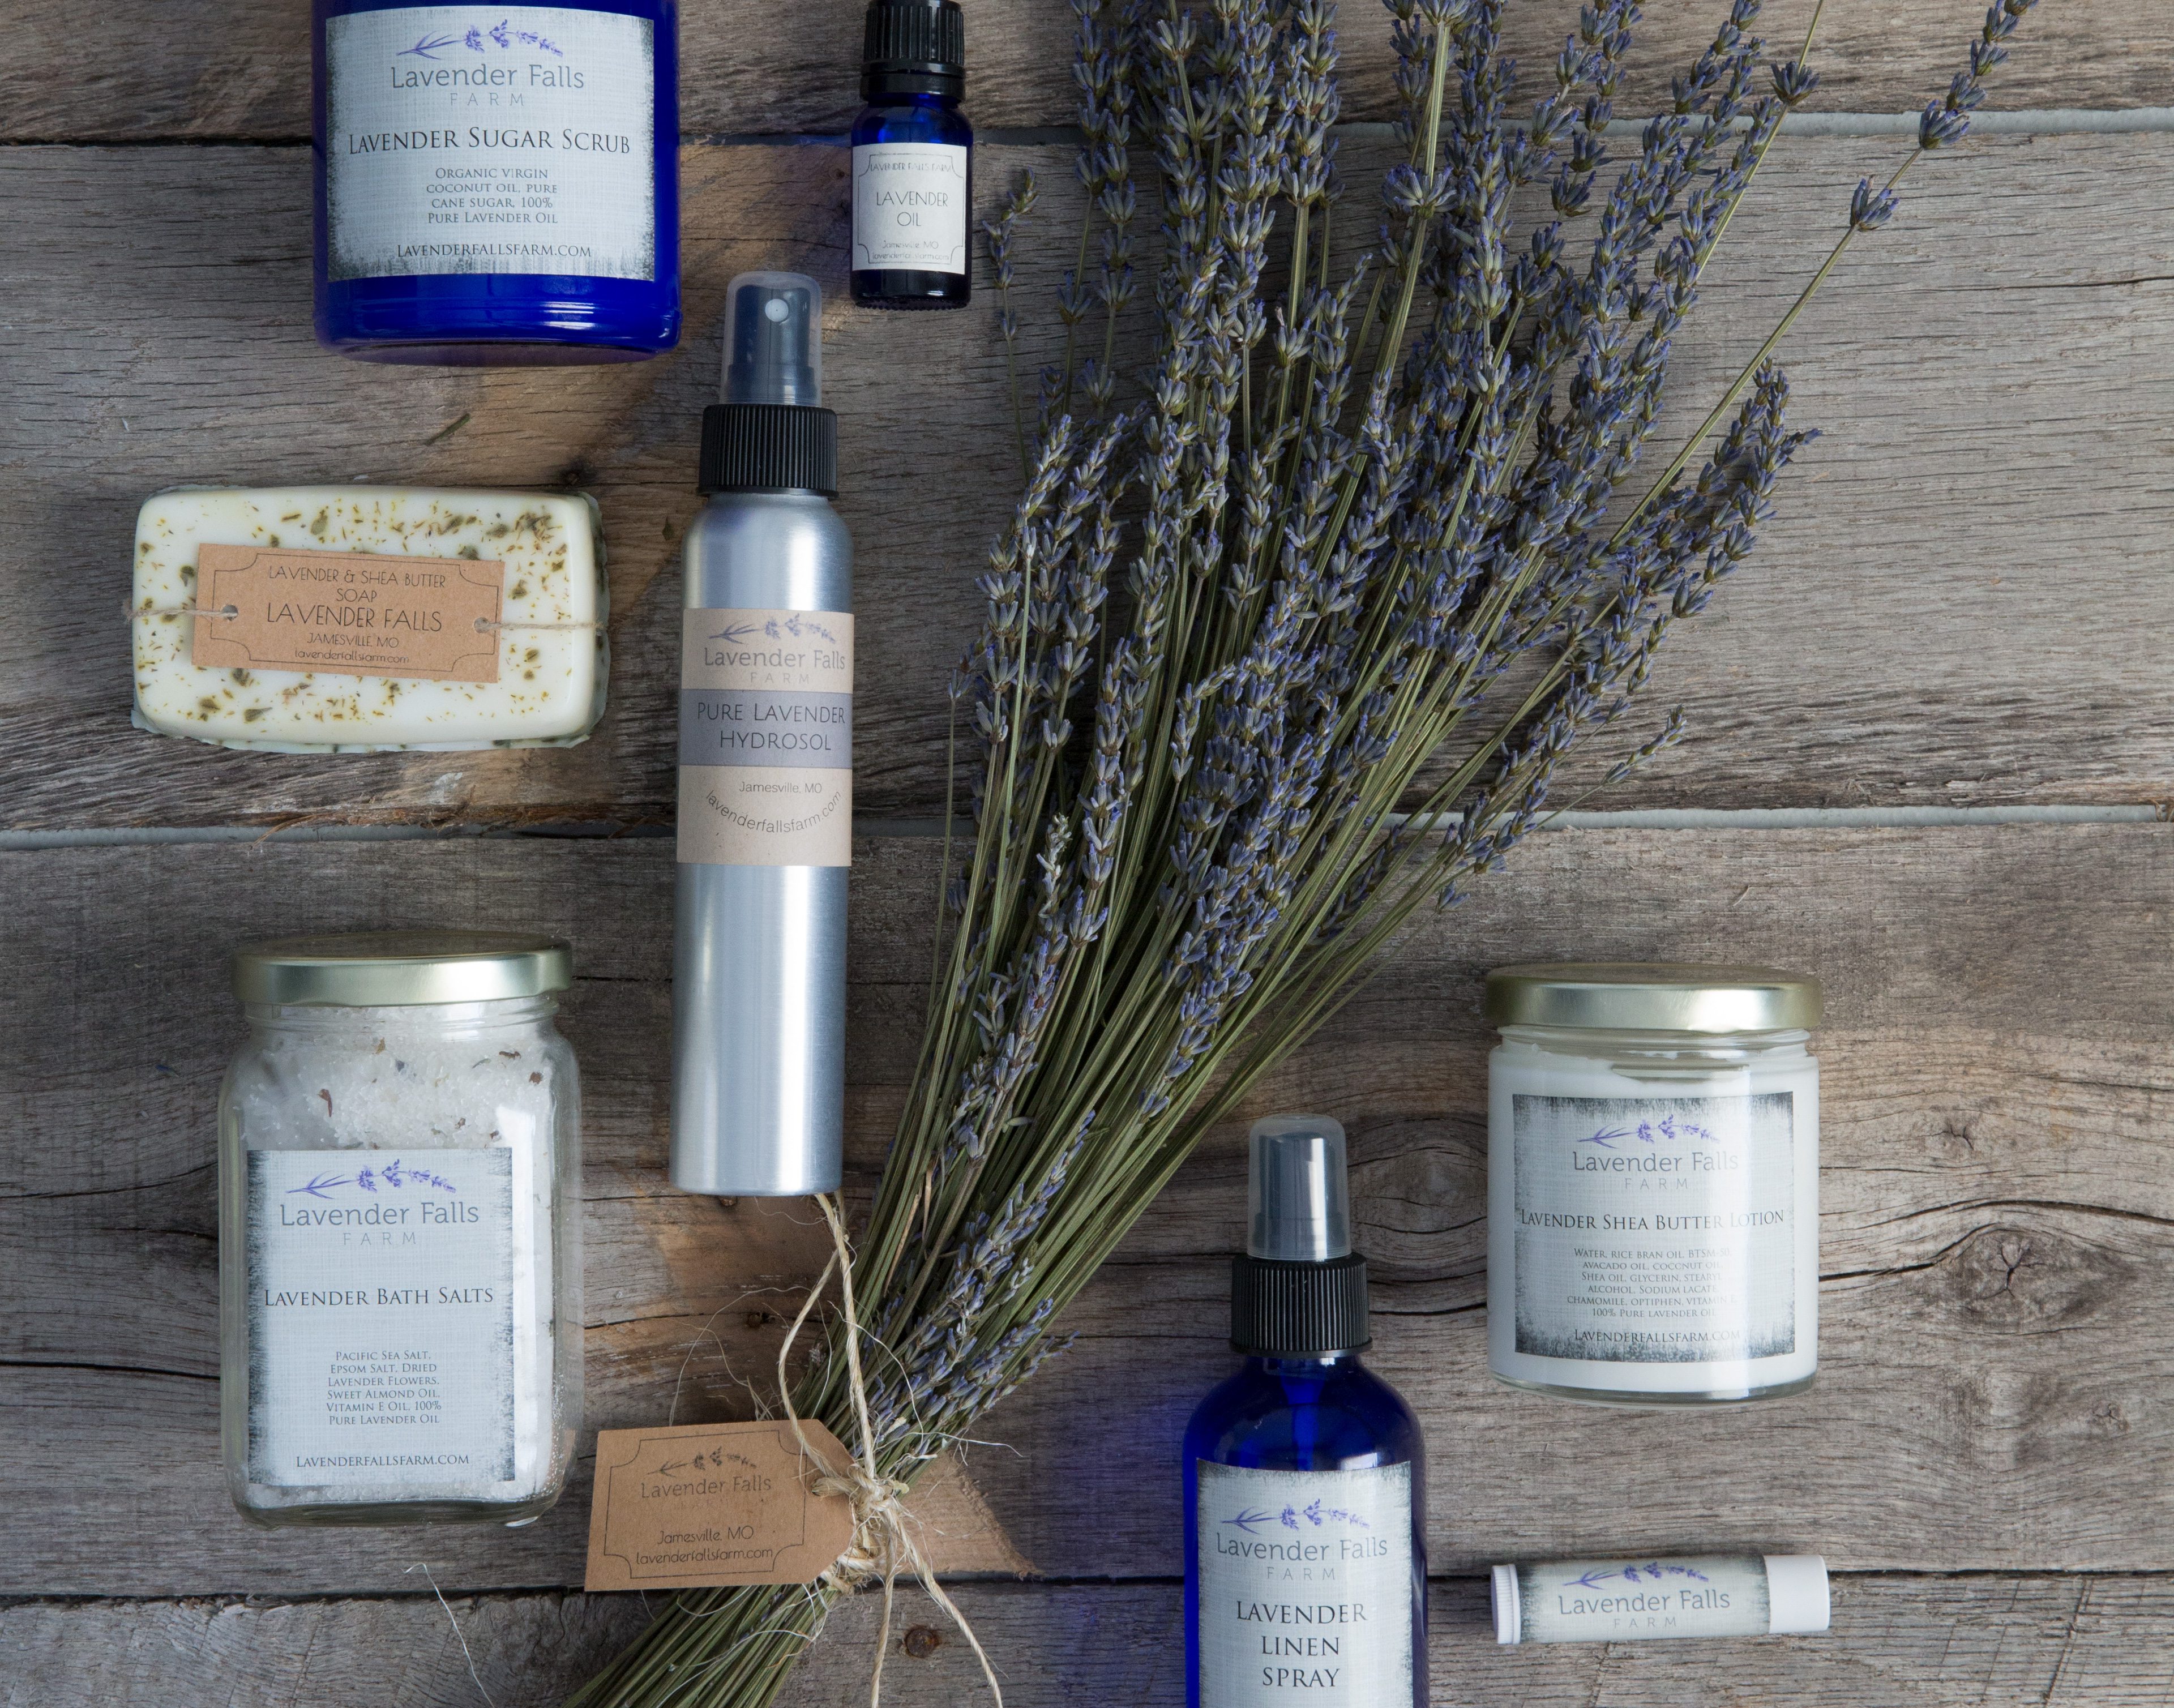 Lavender Falls Farm products